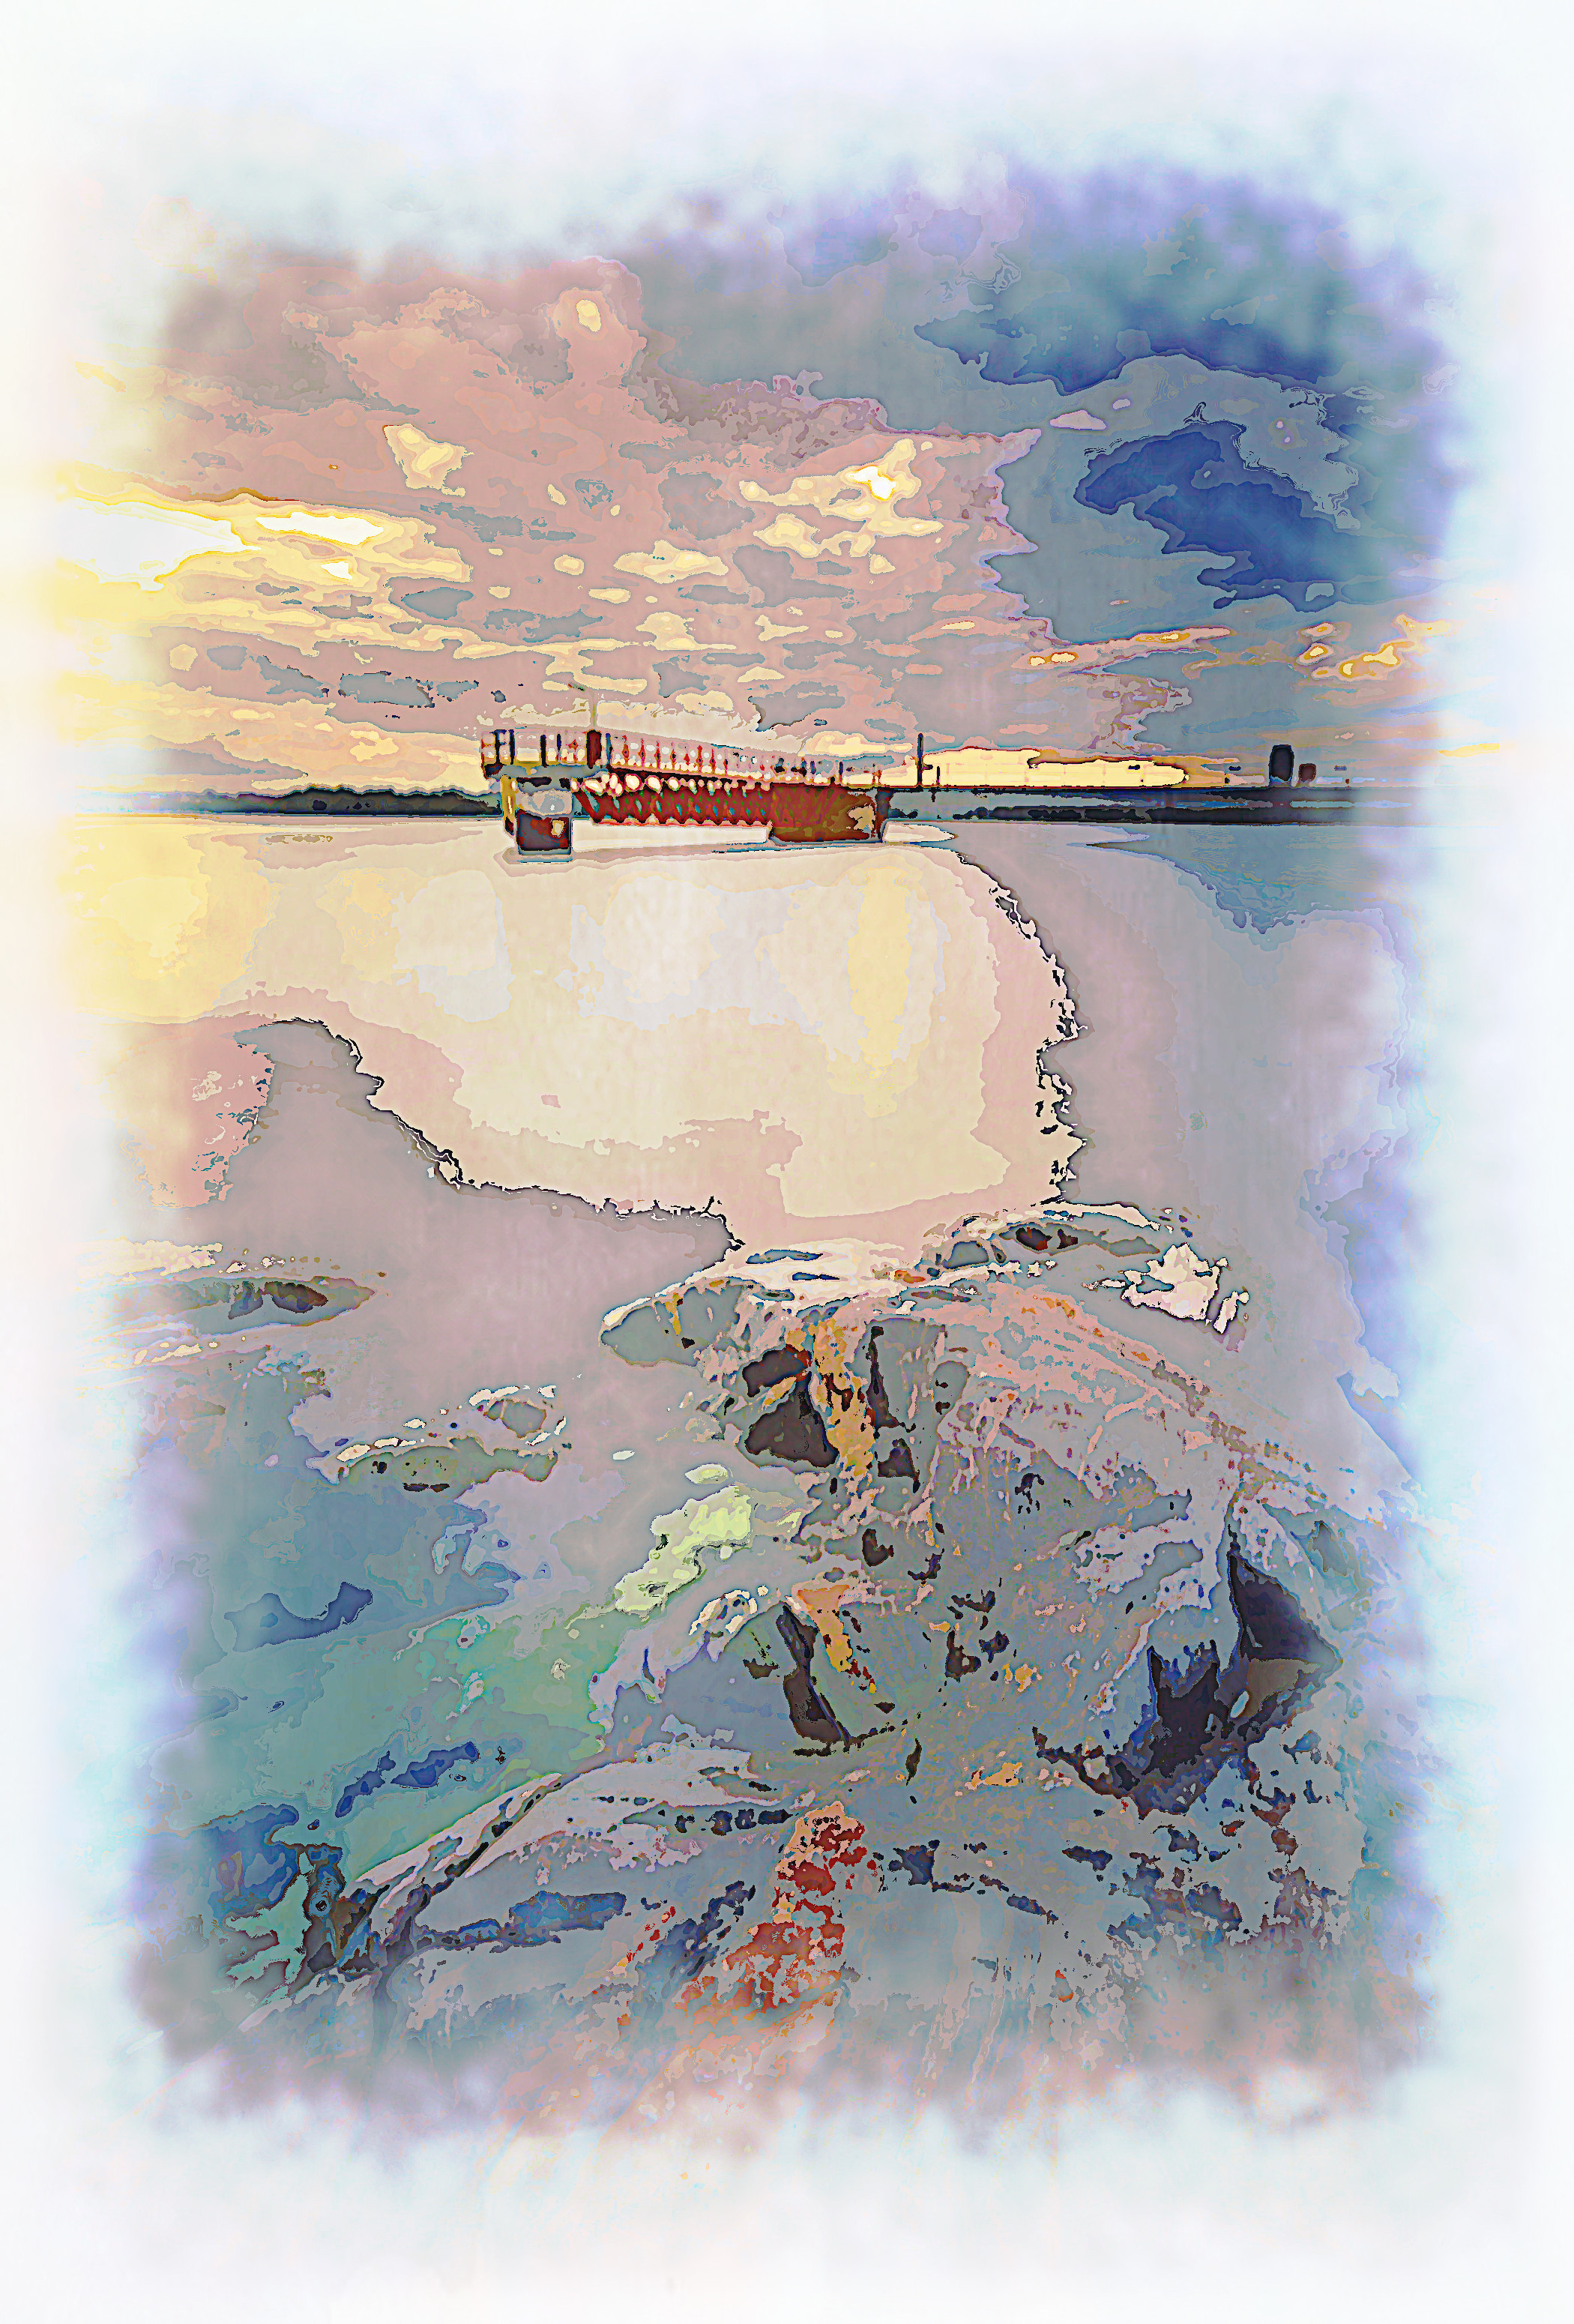 2020-04-08 13-33-28 joakim-honkasalo-LBv91LGa7D4-unsplash as a digital aquarel, using18 colours, source seascape, look colour contrast plus.jpg